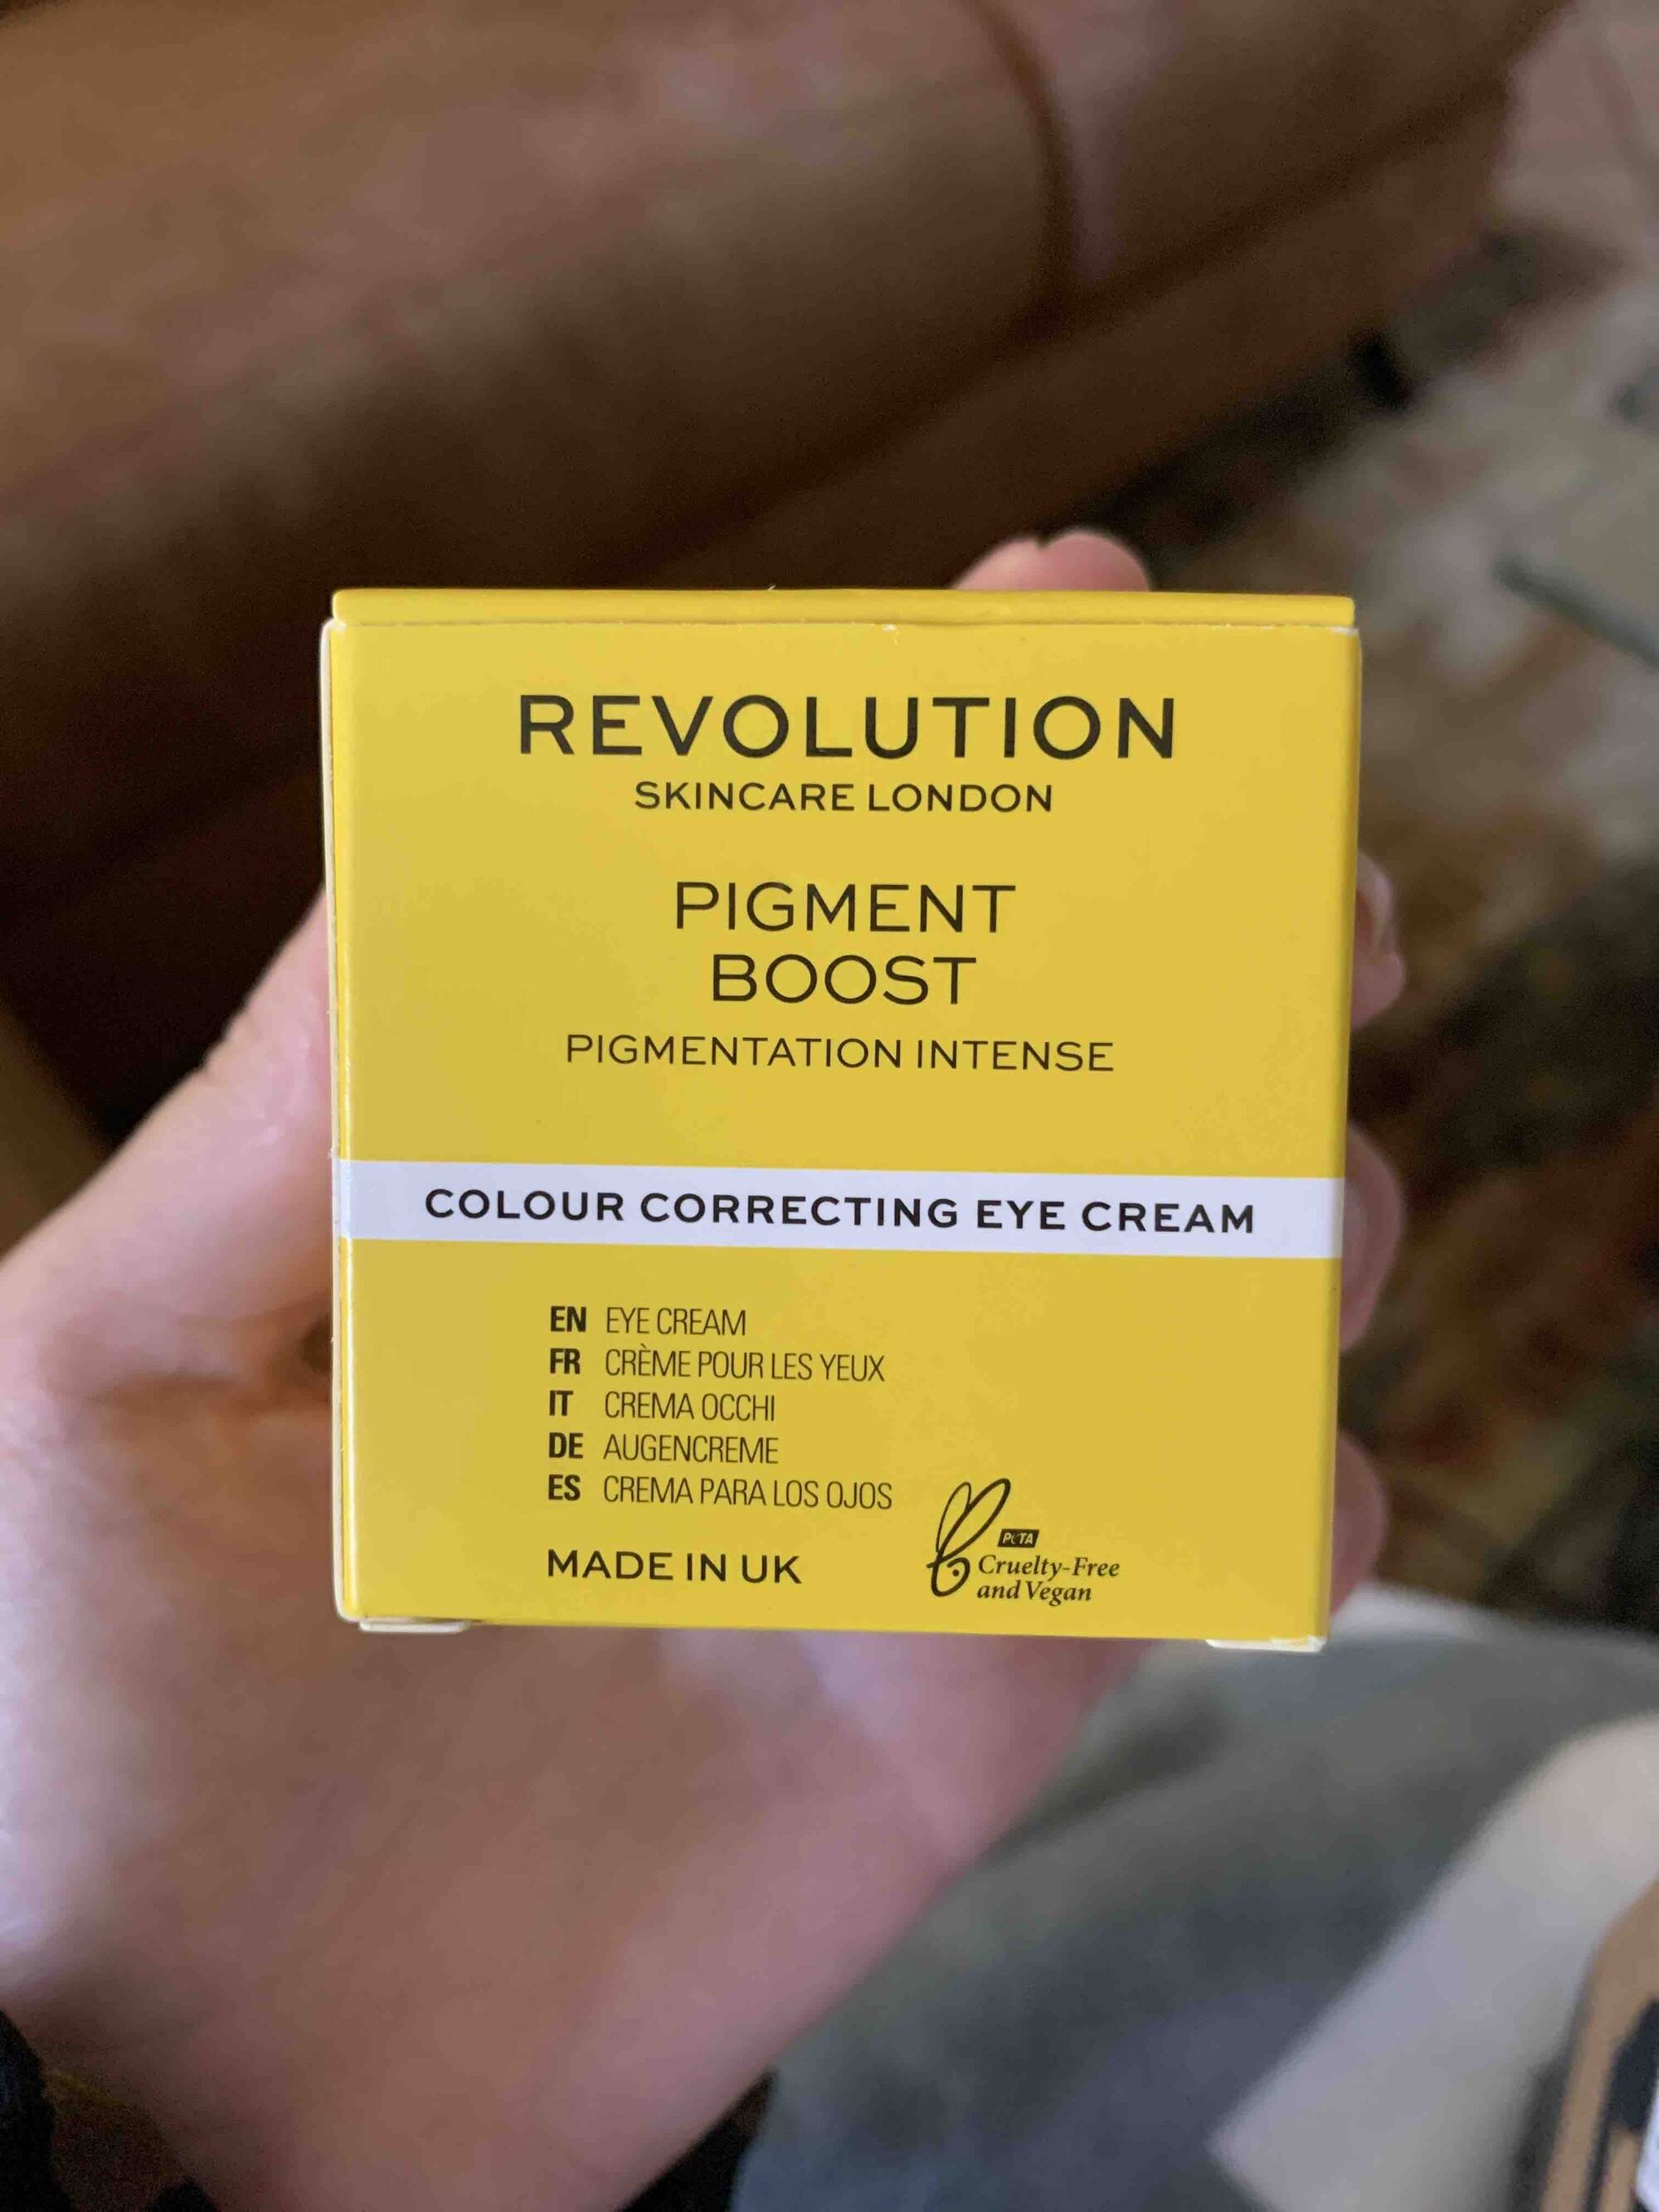 MAKEUP REVOLUTION - Pigment boost - Colour correcting eye cream